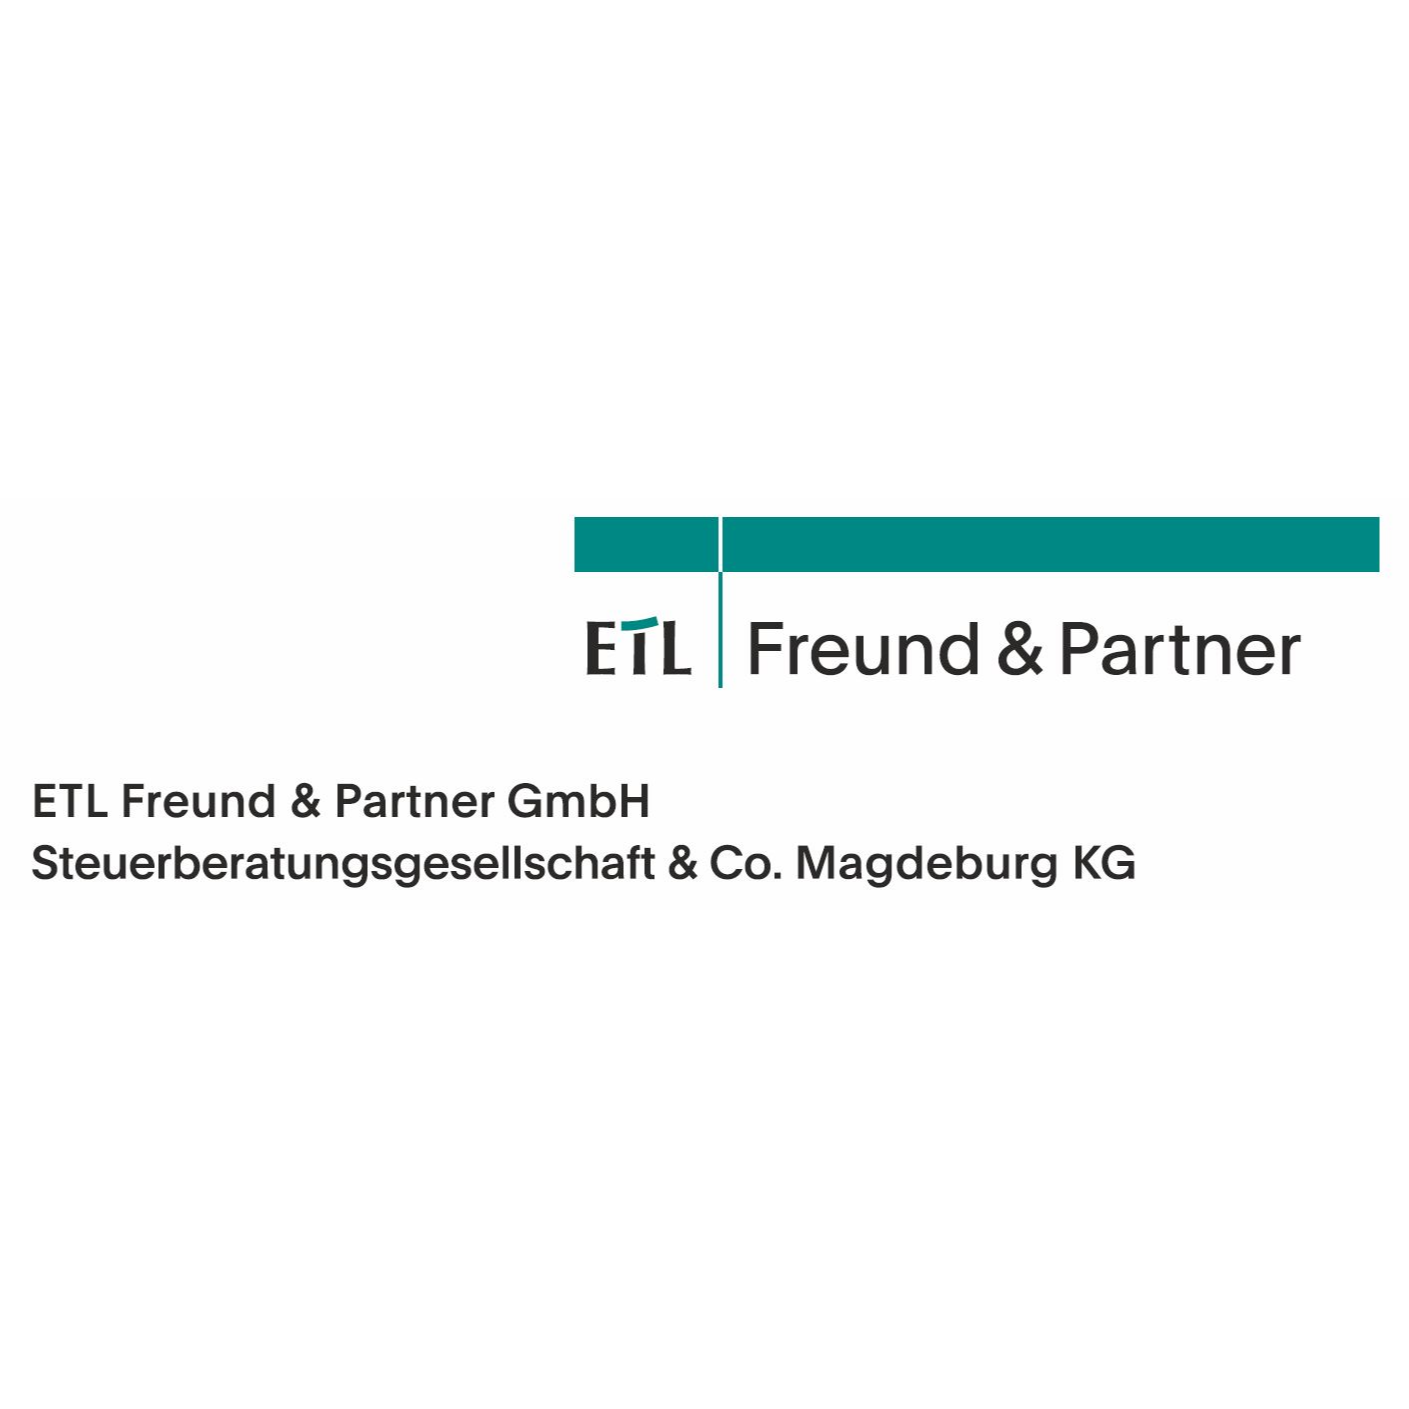 ETL Freund & Partner GmbH Steuerberatungsgesellschaft & Co. Magdeburg KG in Magdeburg